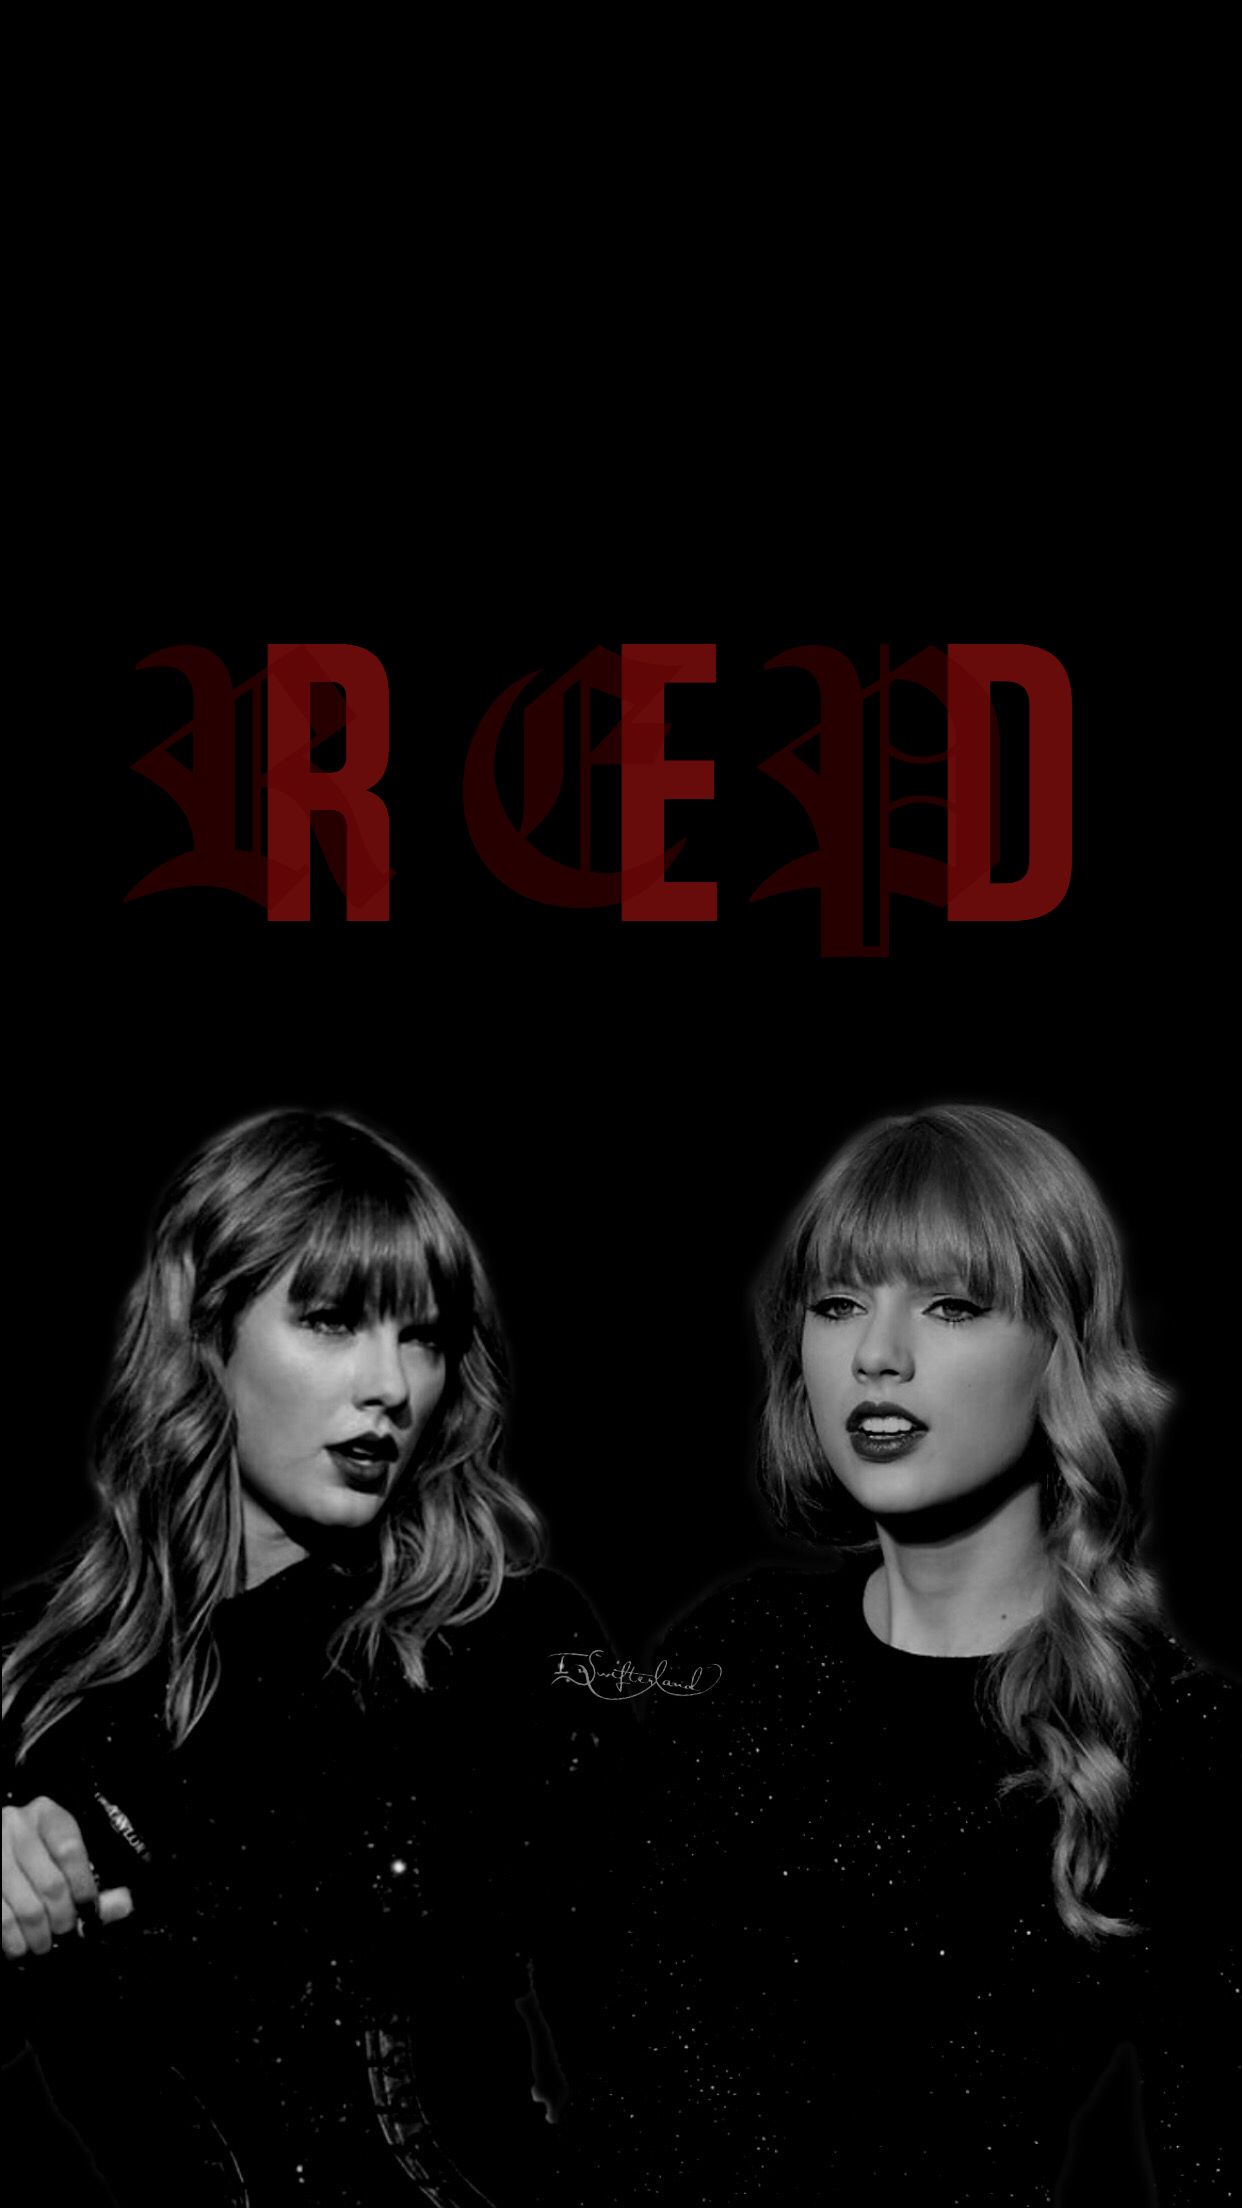 REP. RED Wallpaper. Taylor swift wallpaper, Taylor swift picture, Taylor swift red